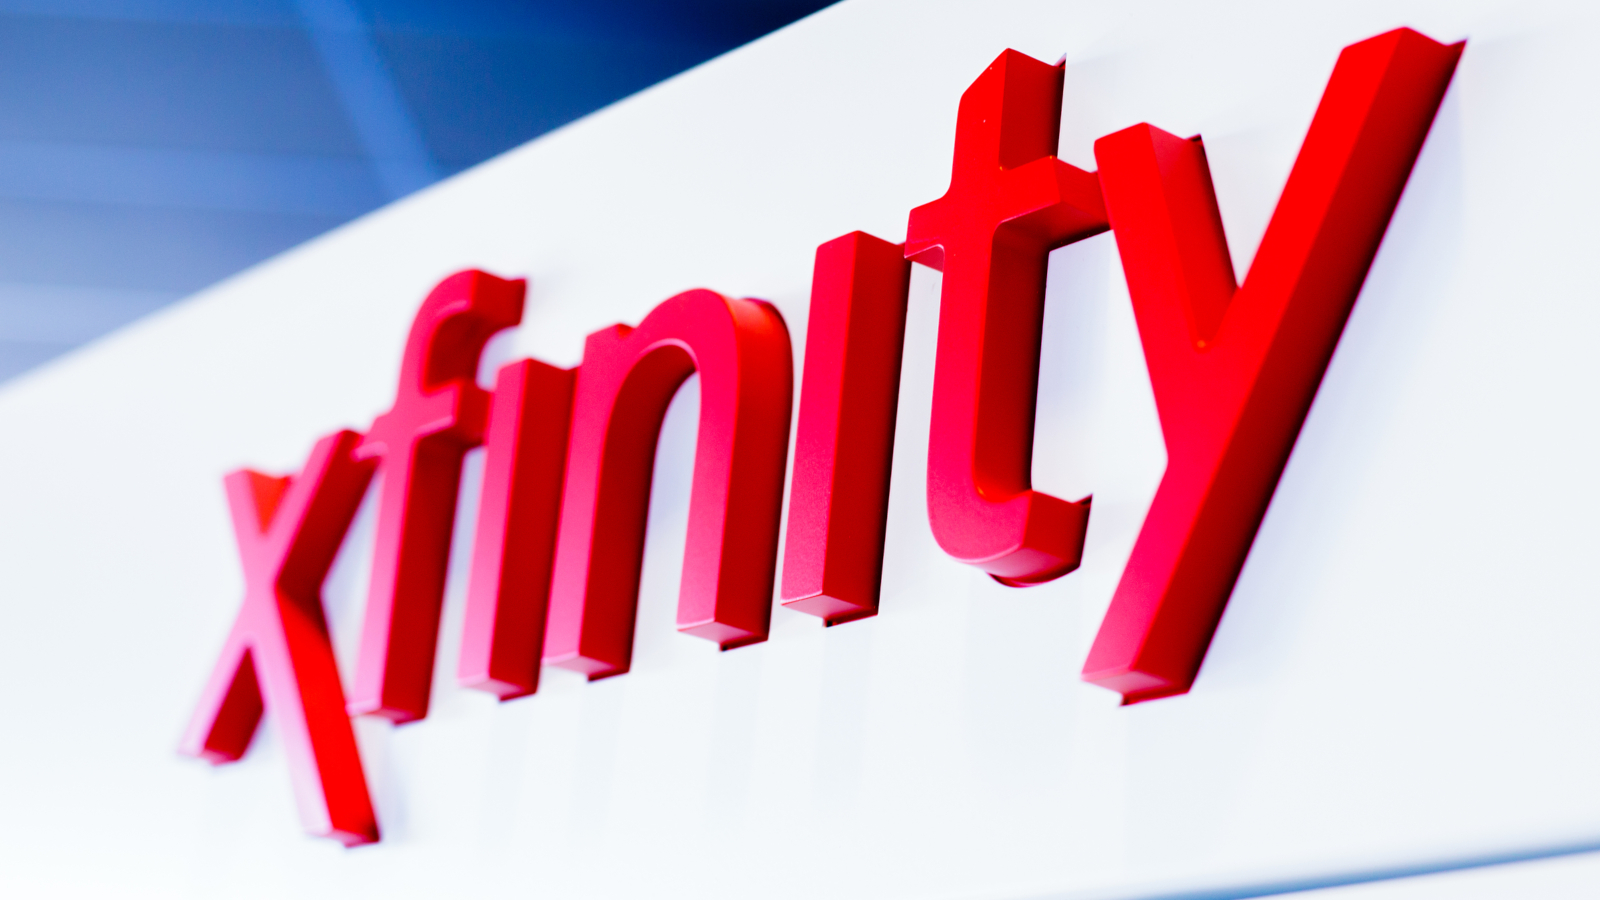 The Xfinity logo.